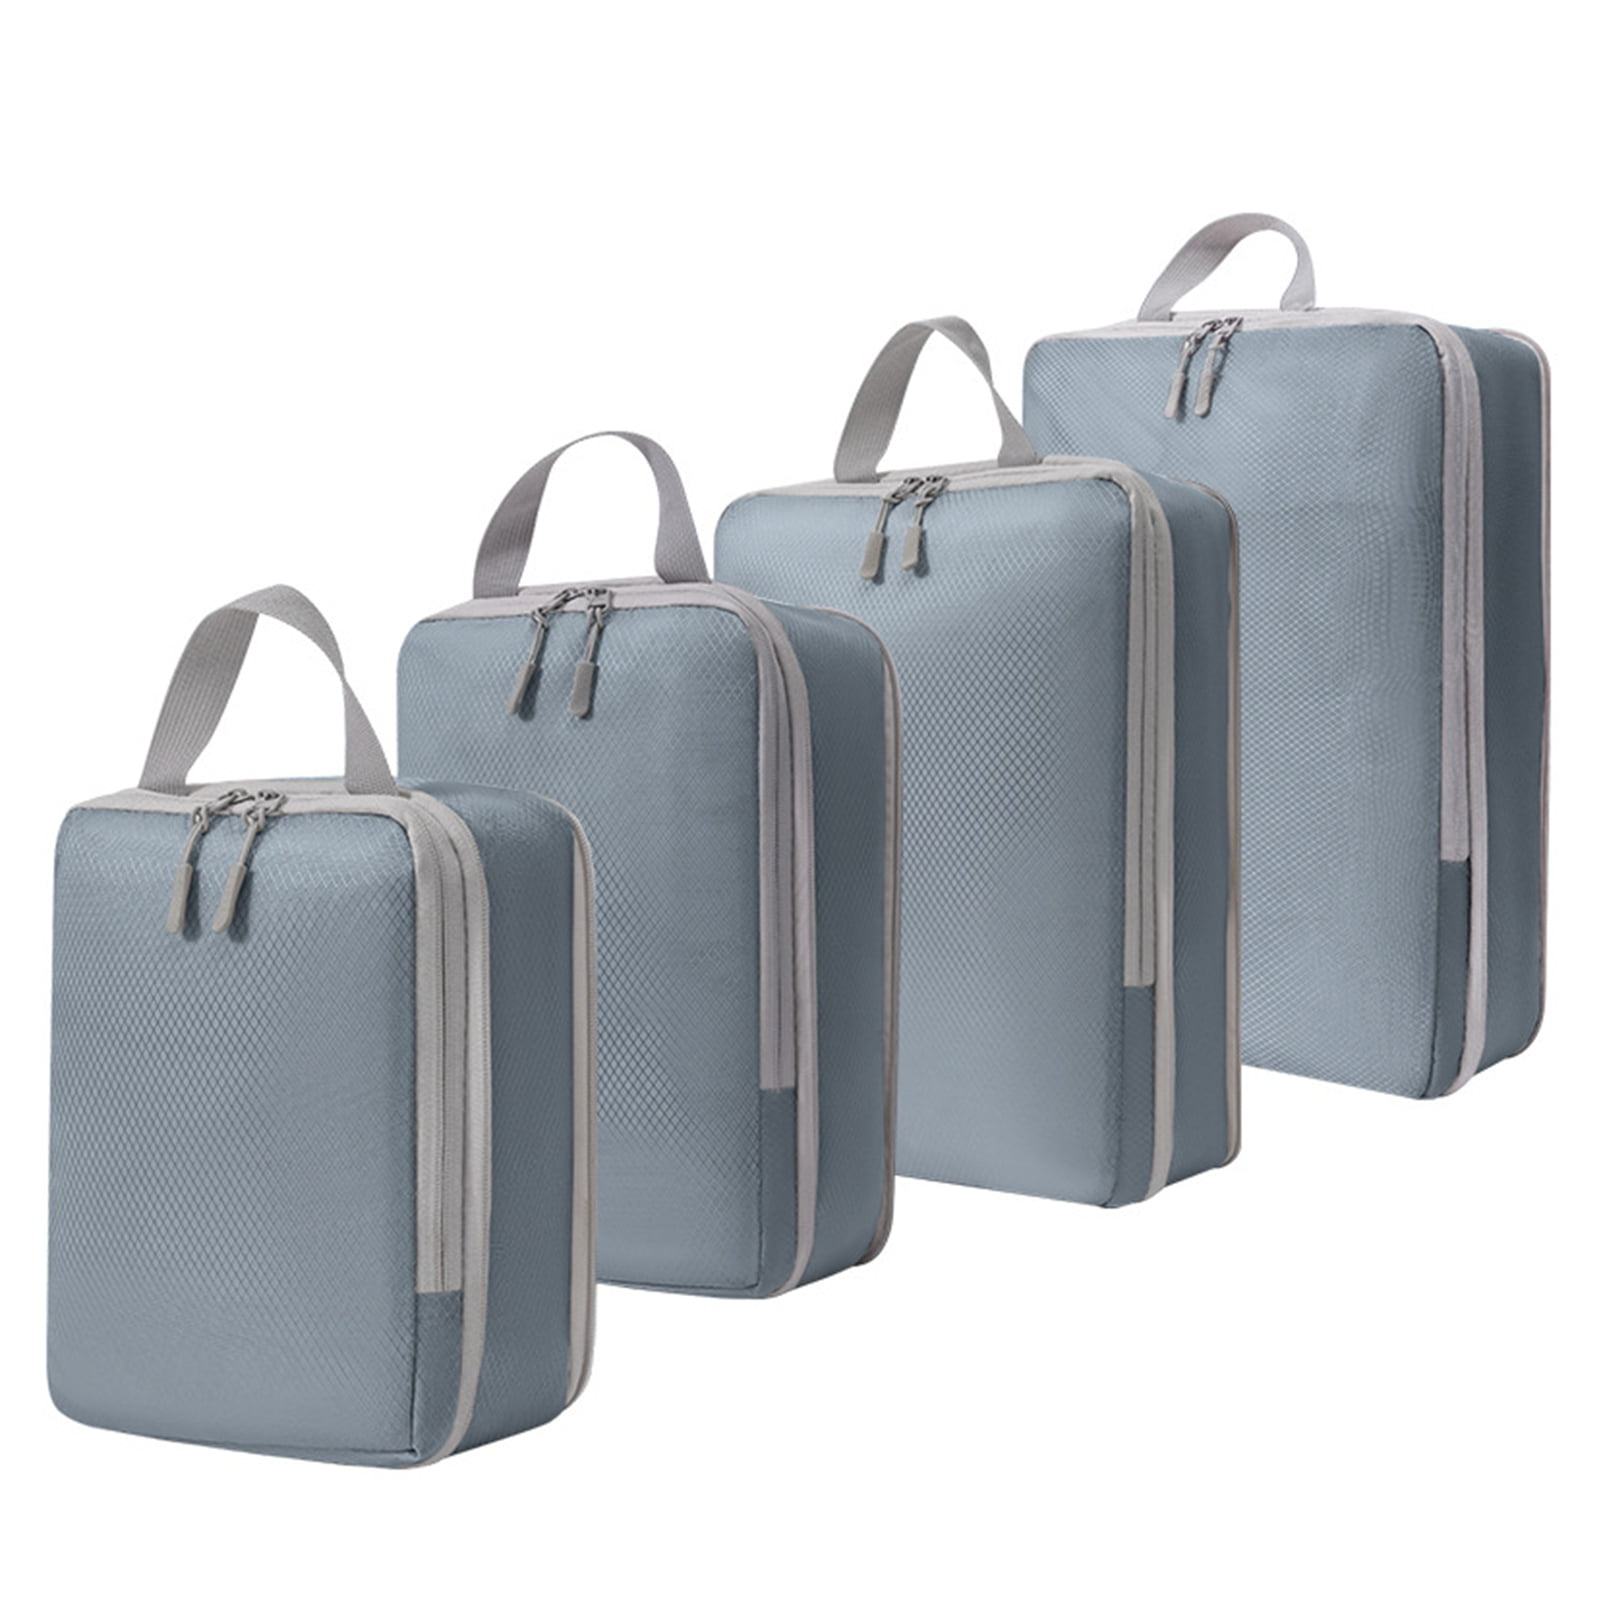 LeKY Travel Storage Bag Expandable Travel Packing Organizer Travel ...